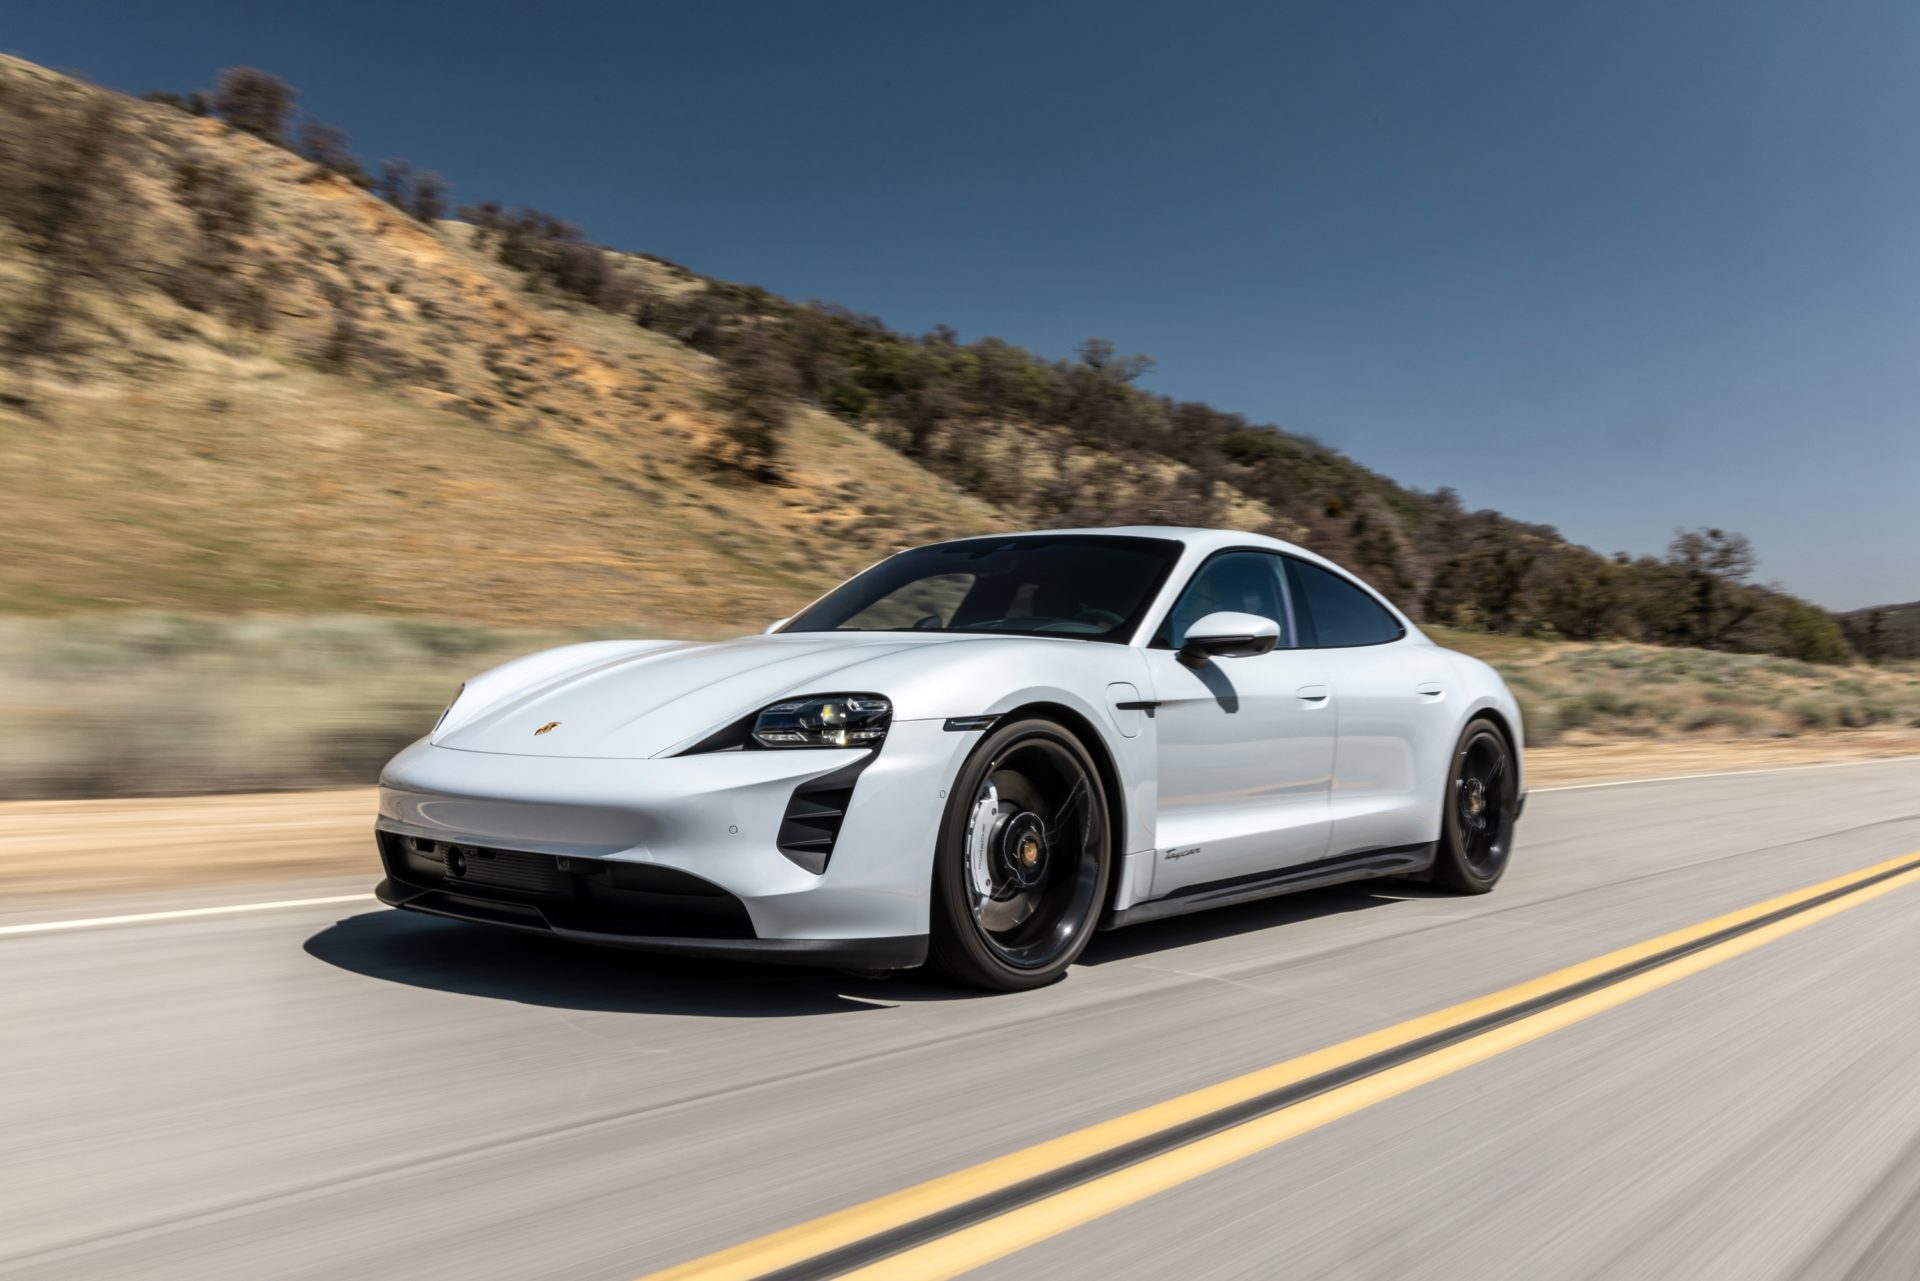 Porsche Taycan Recall 43 000 Models Need An Update To Address Sudden Power Loss Issue The